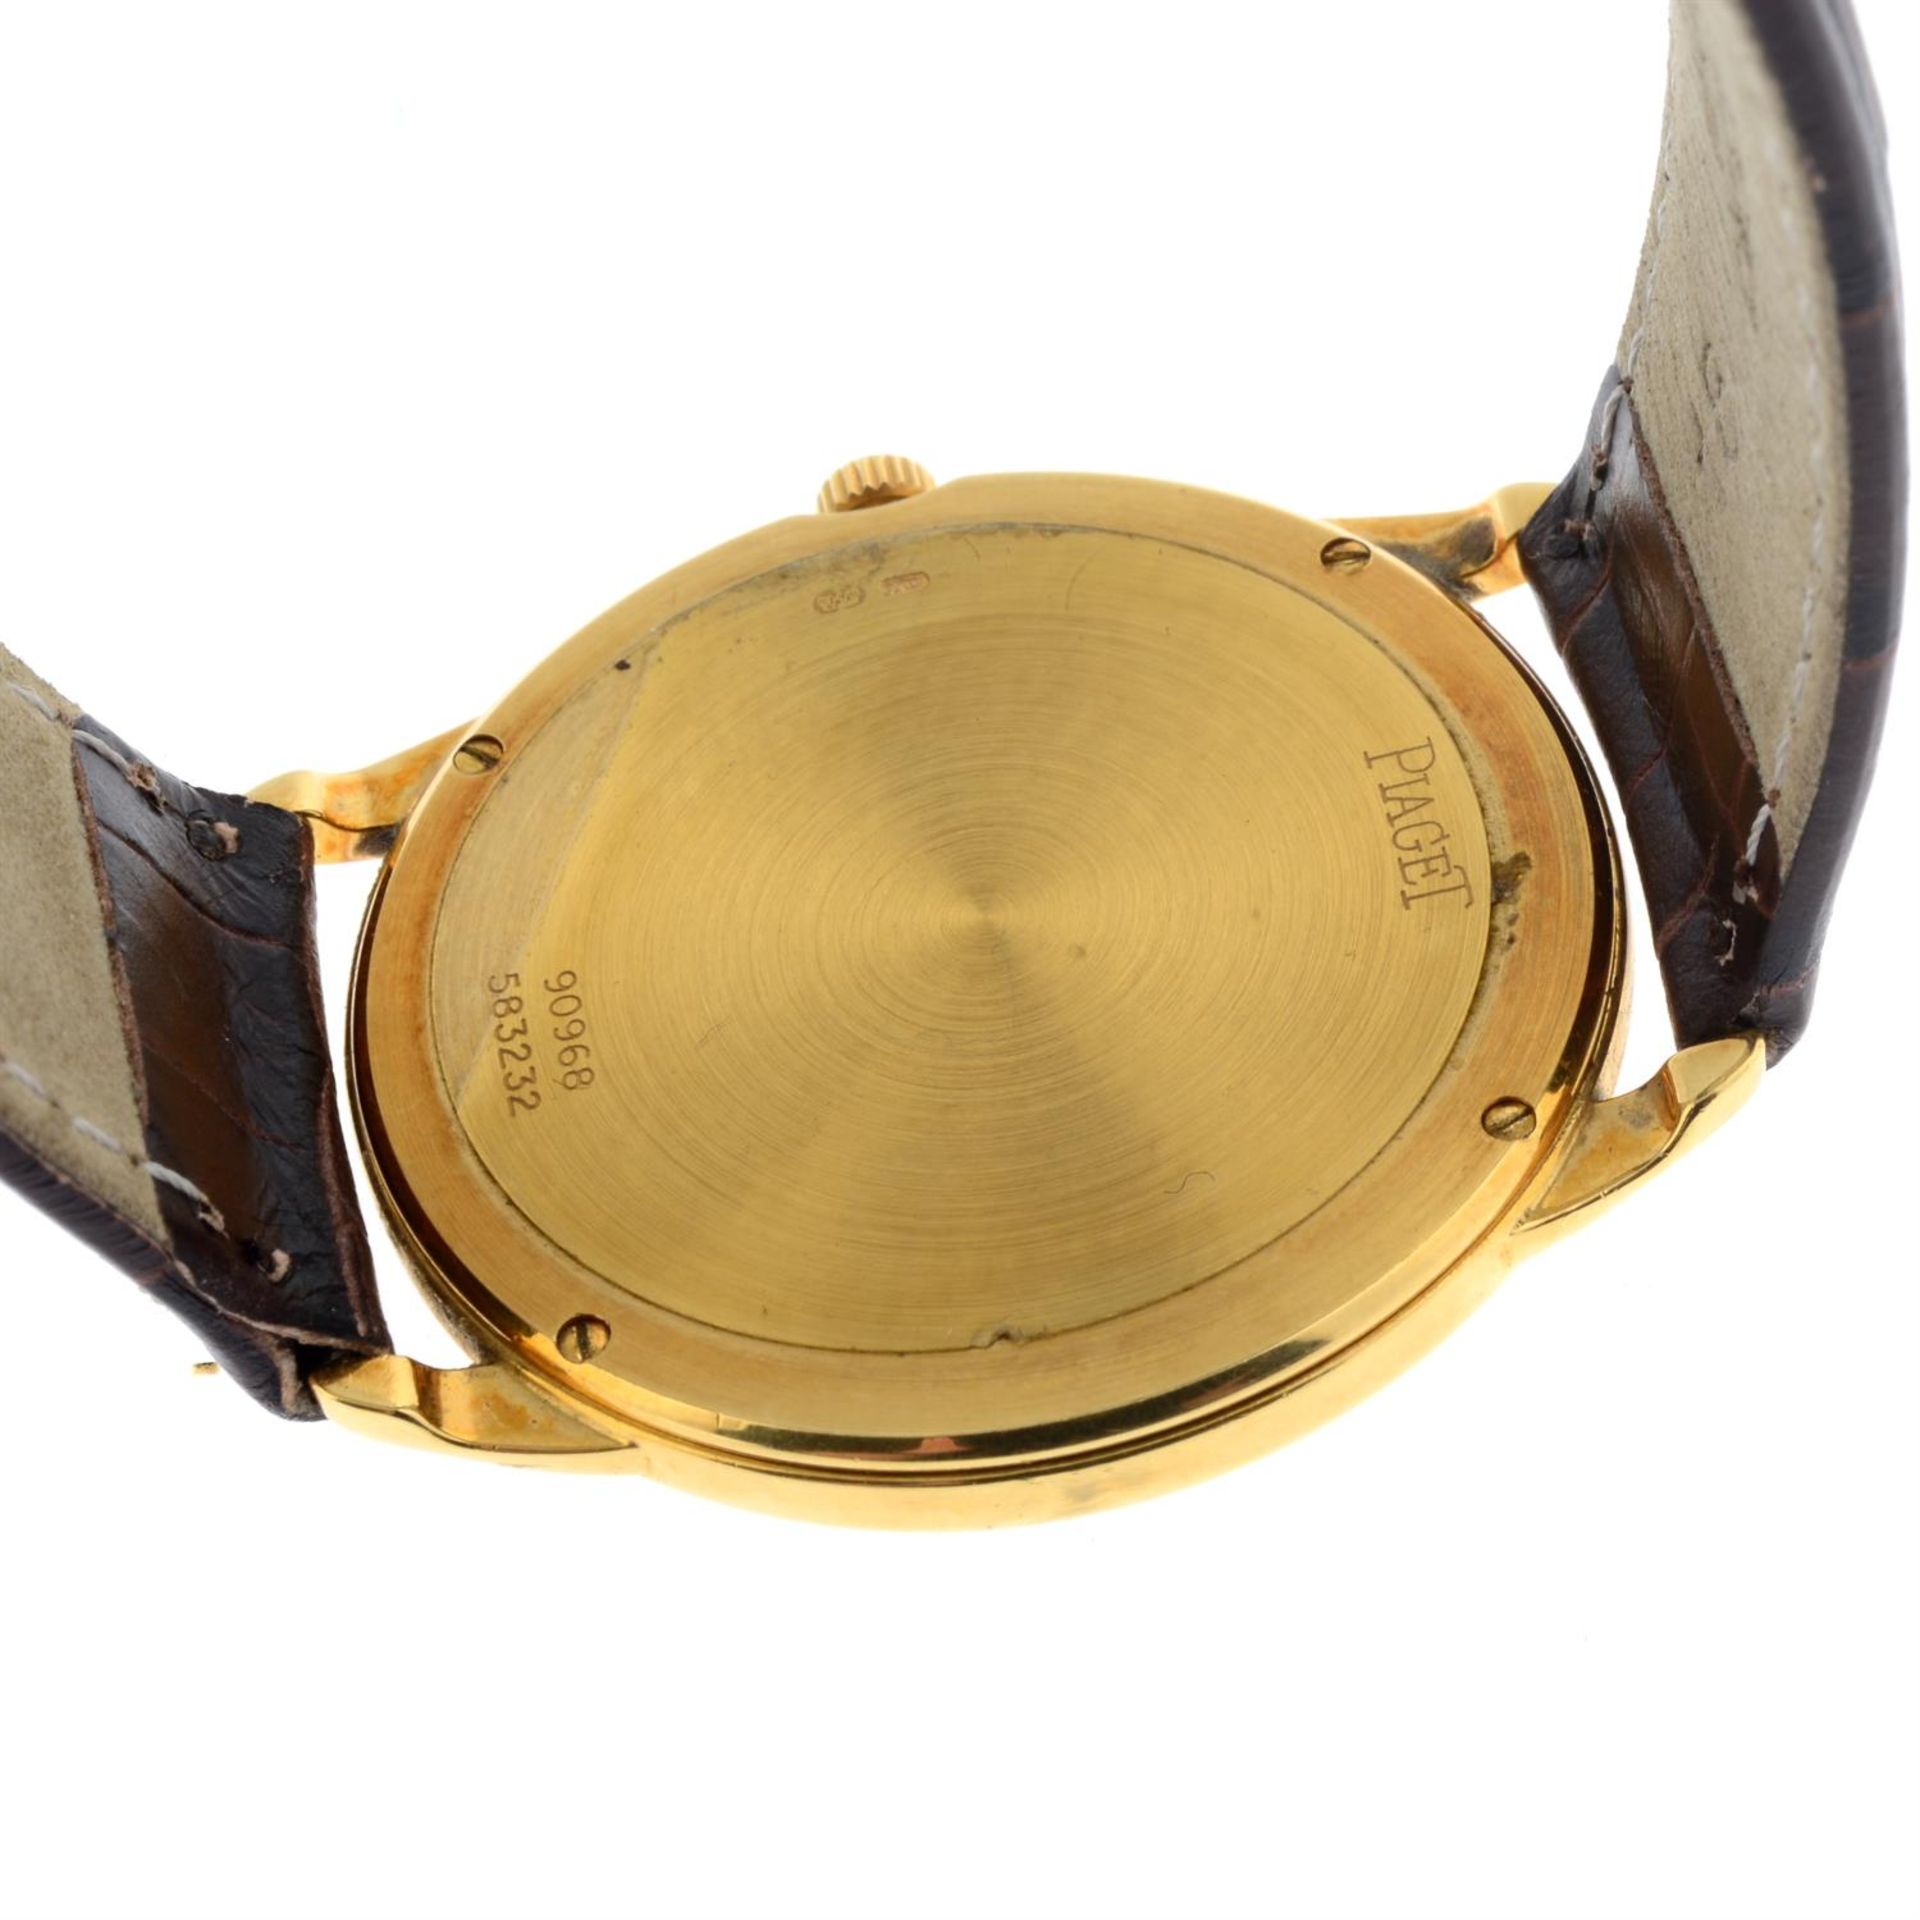 PIAGET - an 18ct yellow gold Ultra Thin wrist watch, 33mm. - Image 2 of 5